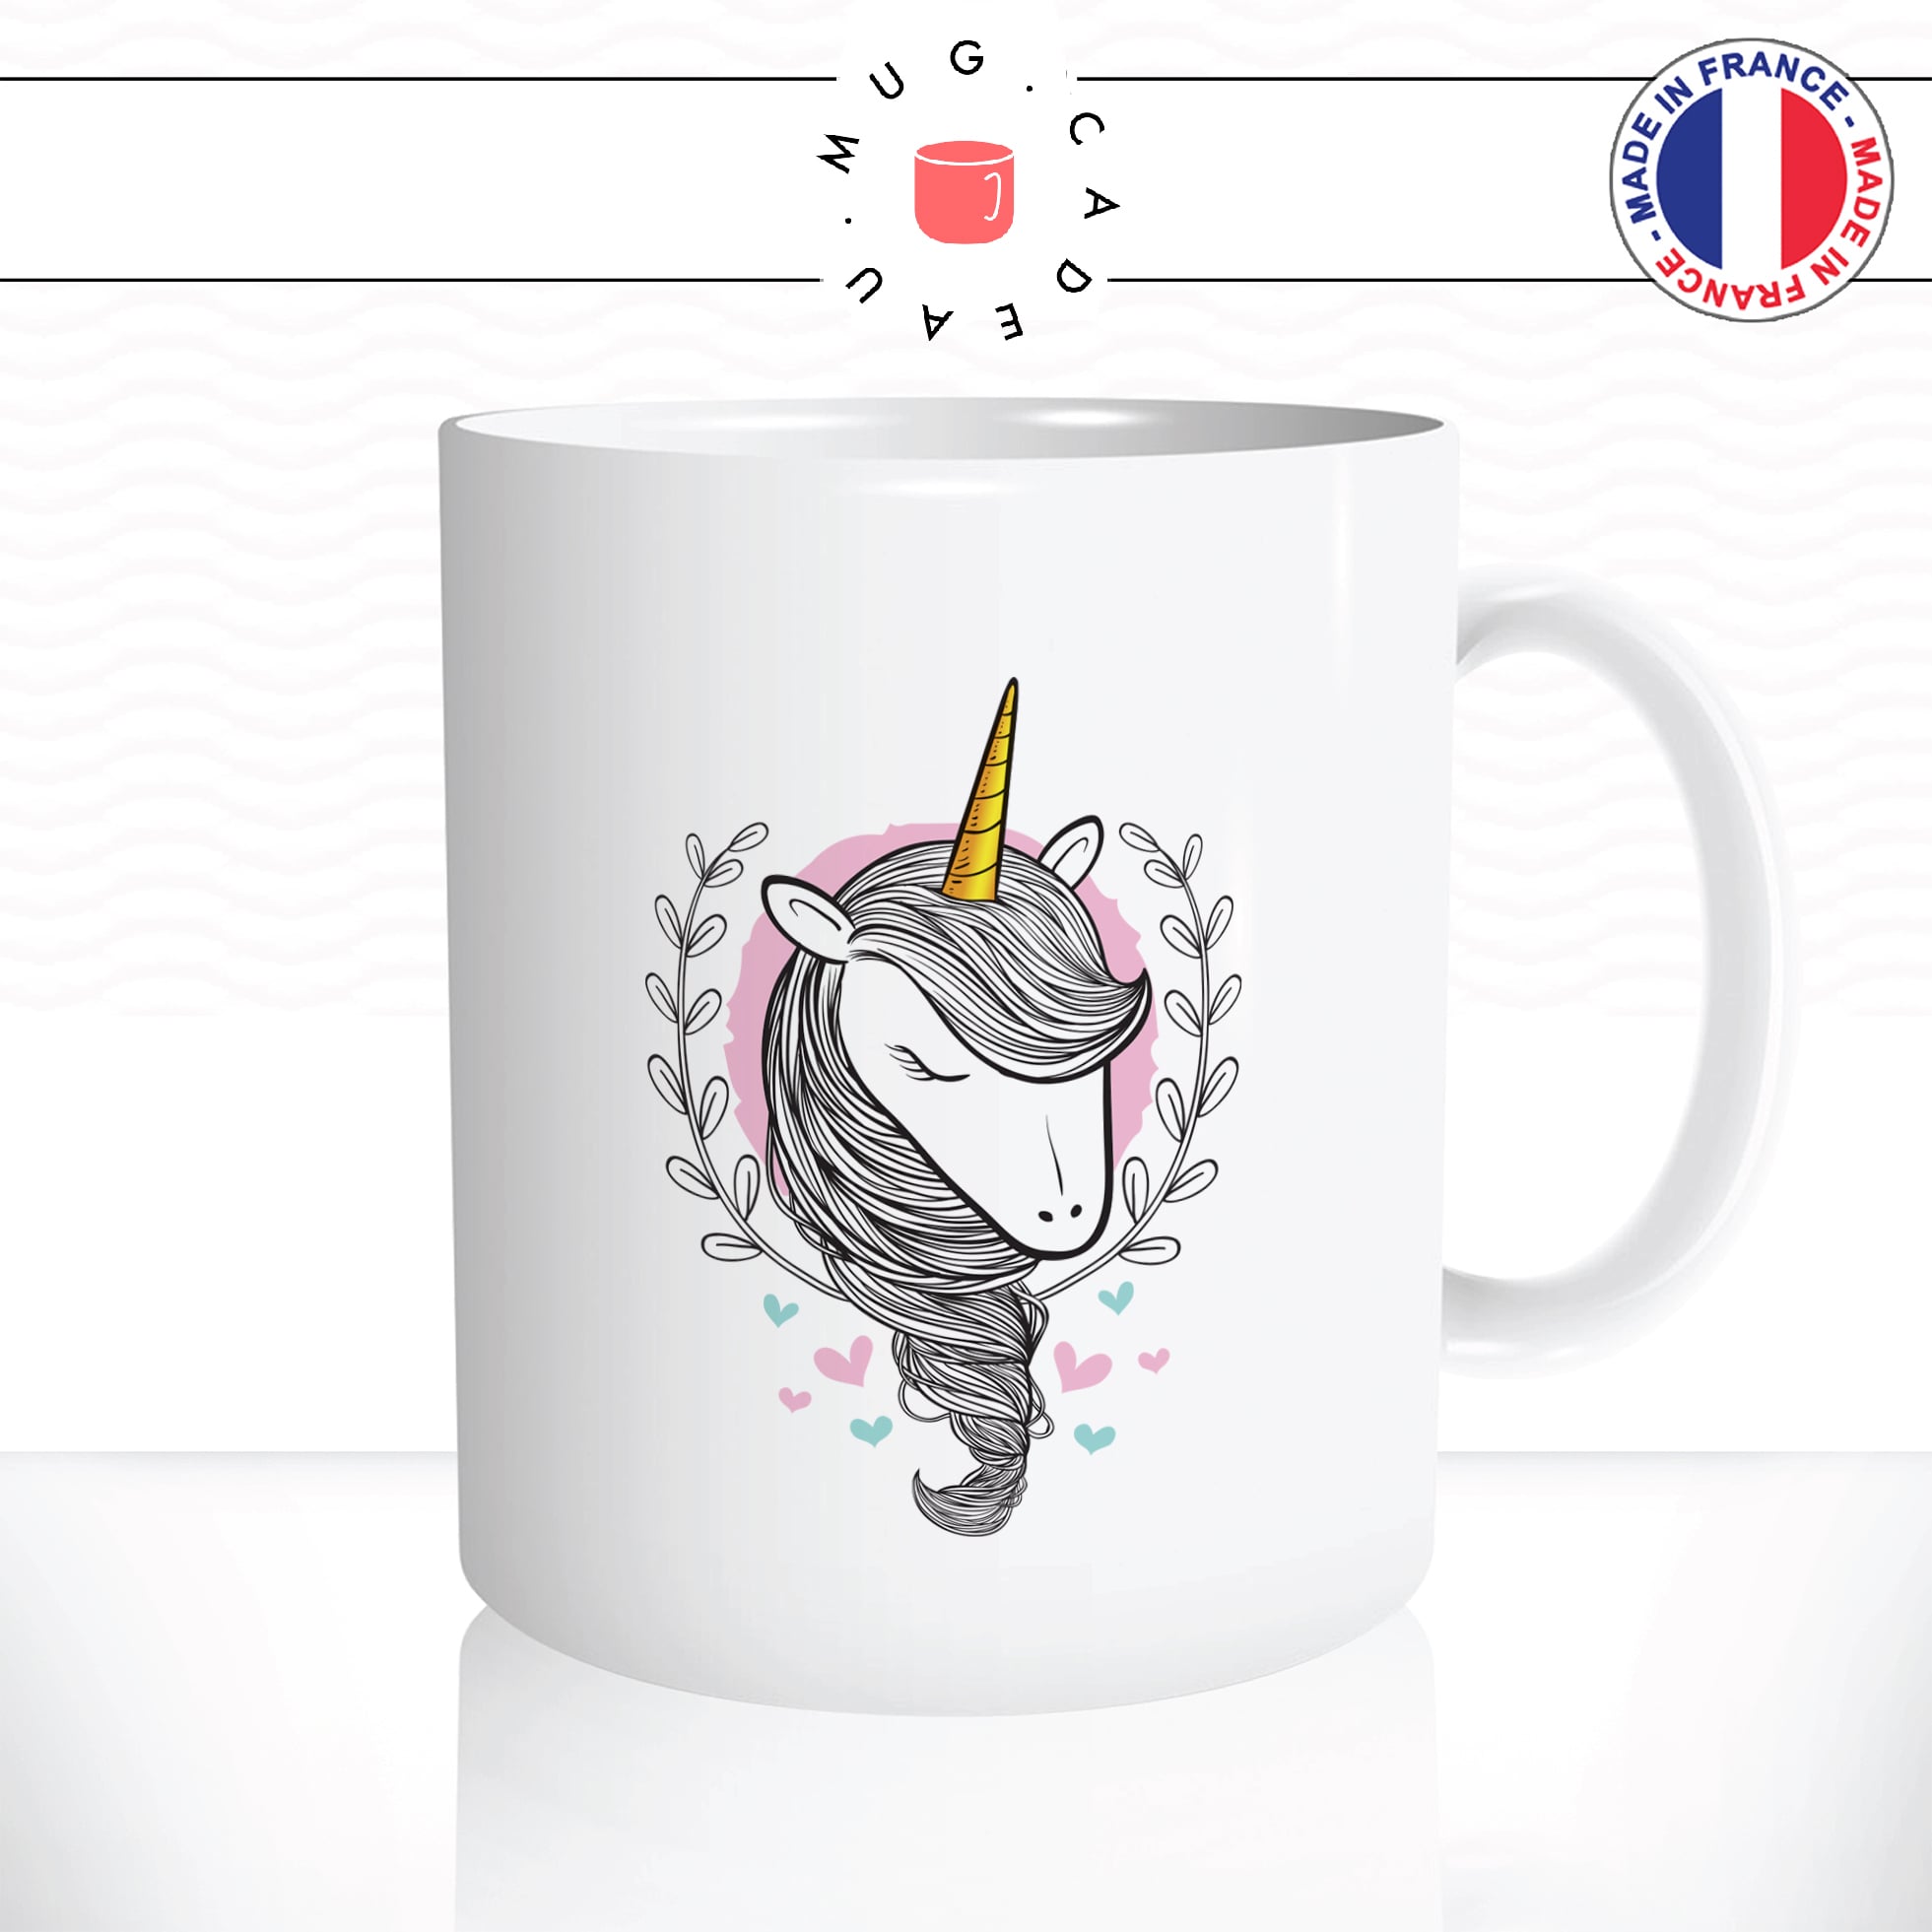 mug-tasse-animal-licorne-fleurs-dessin-cool-fun-mugs-tasses-café-thé-idée-cadeau-original-personnalisable1